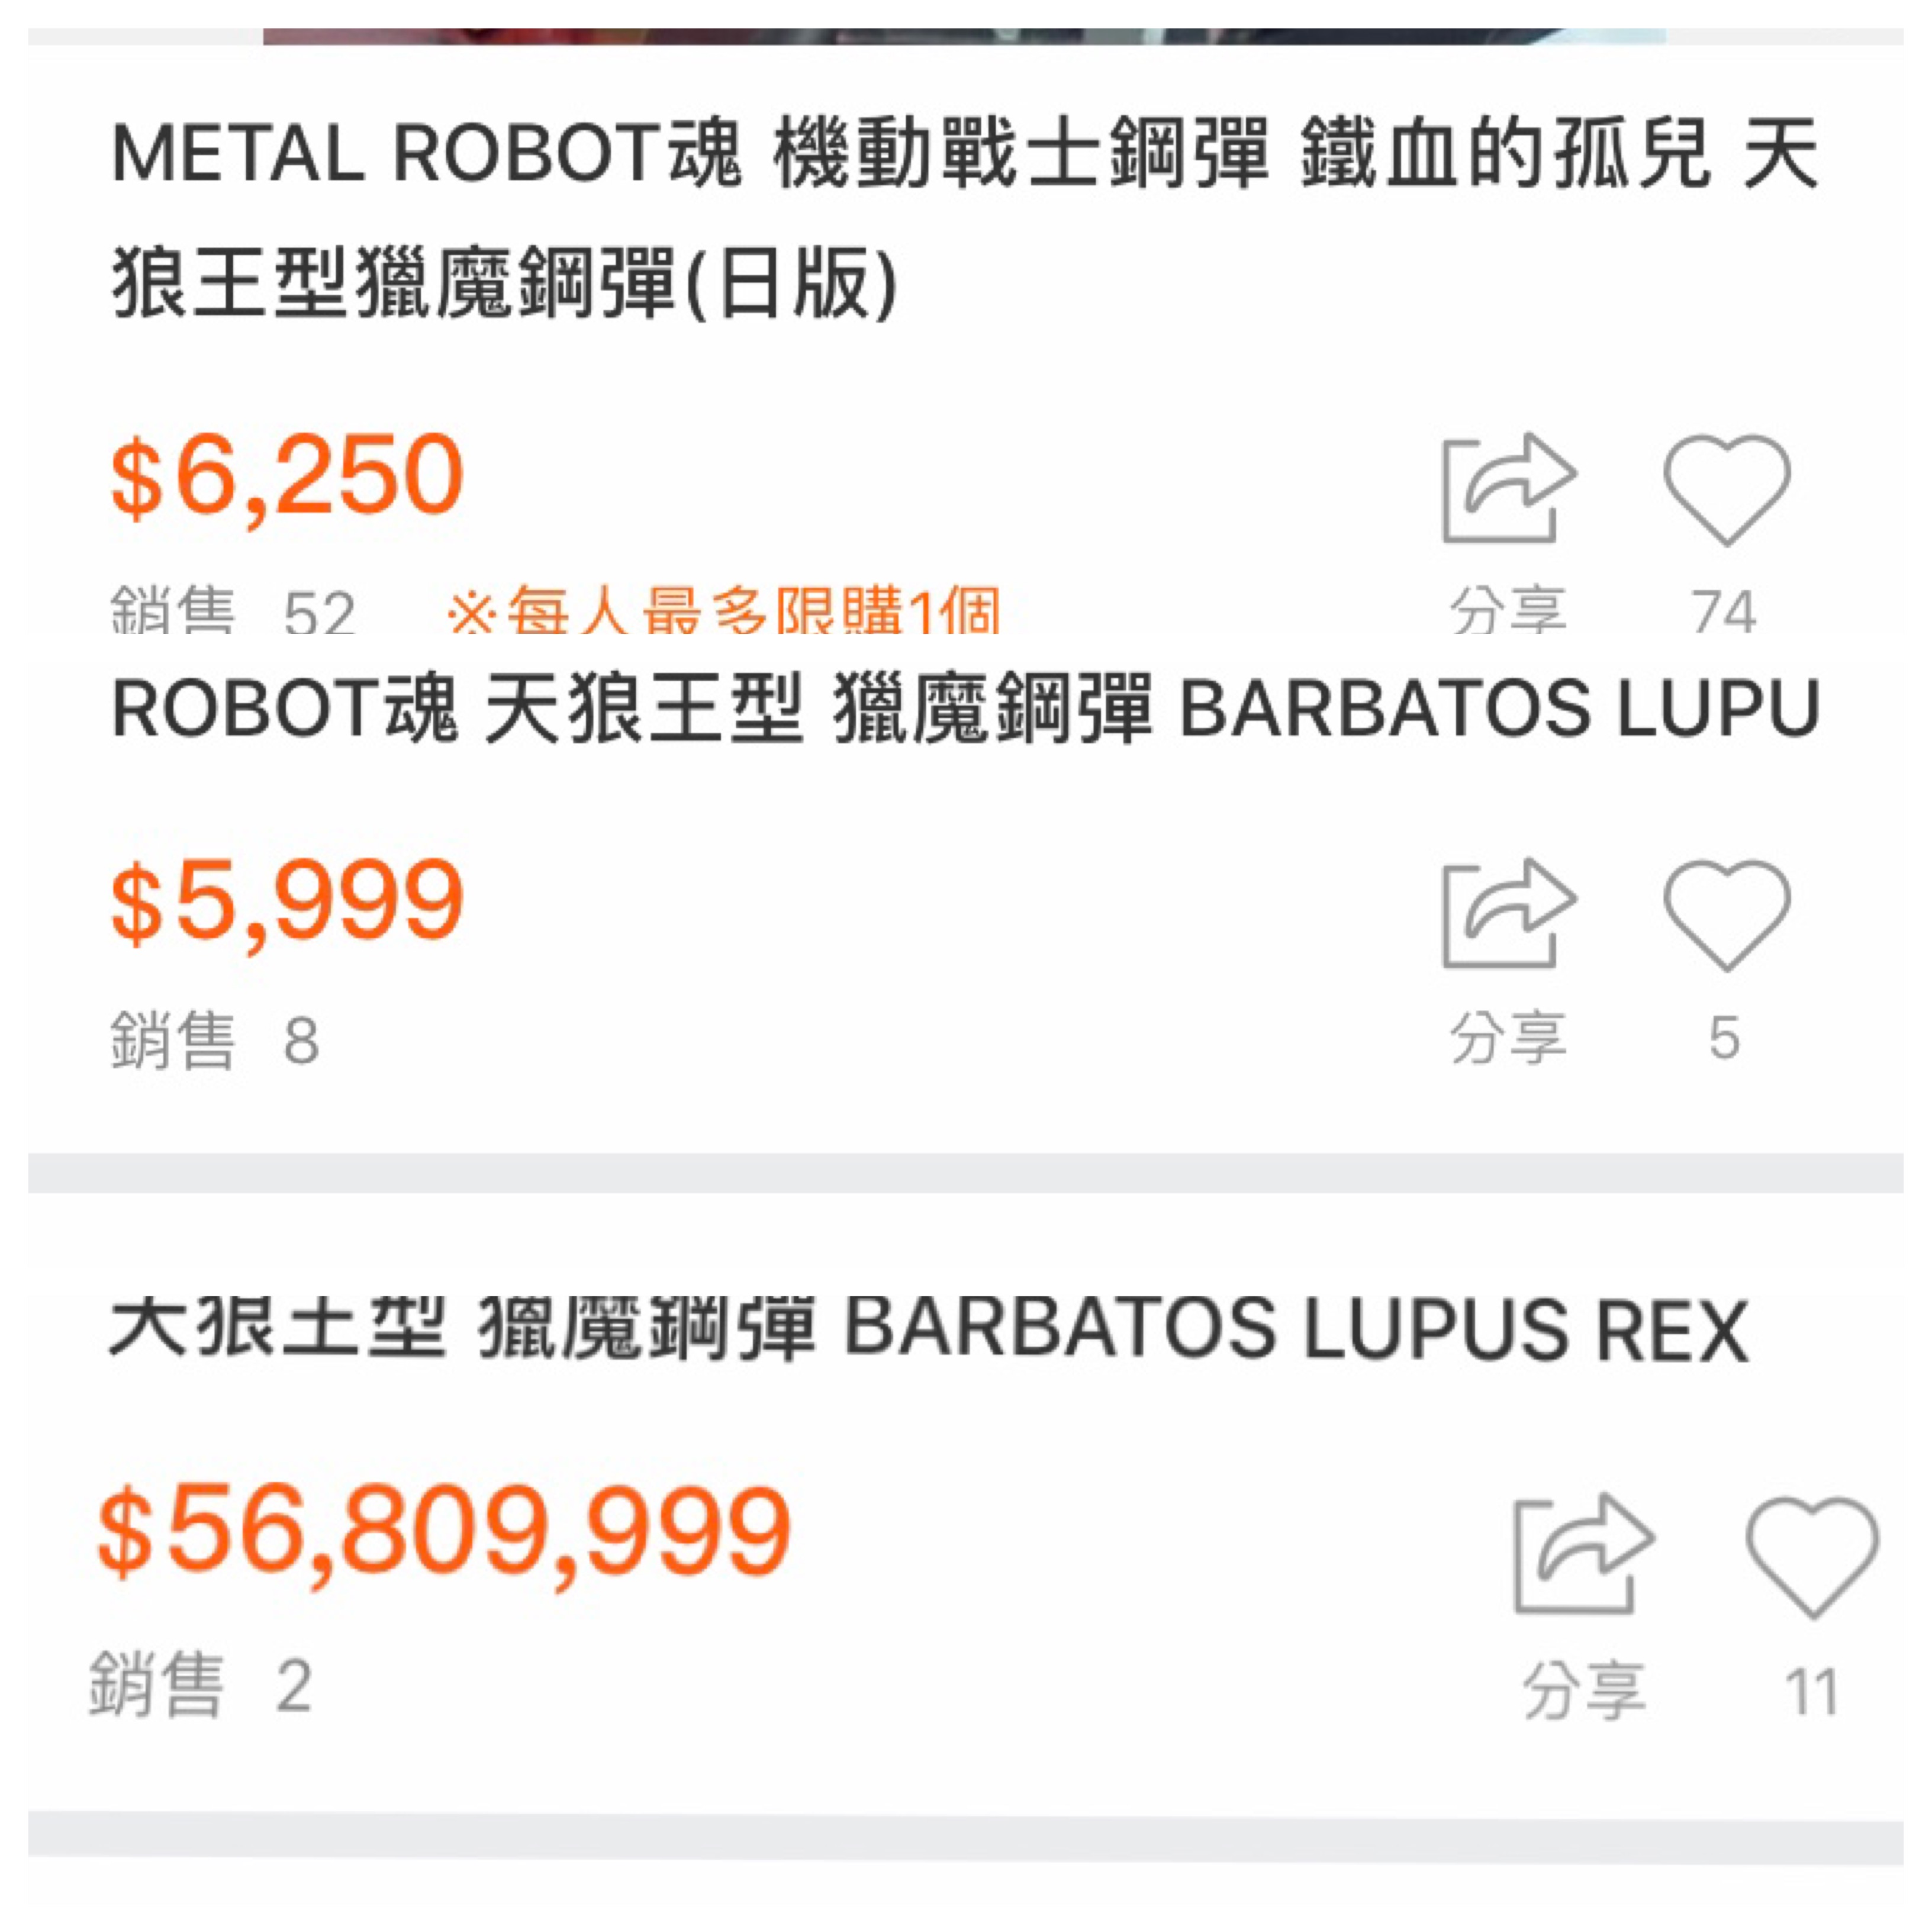 RE:【情報】METAL ROBOT魂 ガンダムバルバトスルプスレクス 發售情報 @鋼彈 哈啦板 - 巴哈姆特